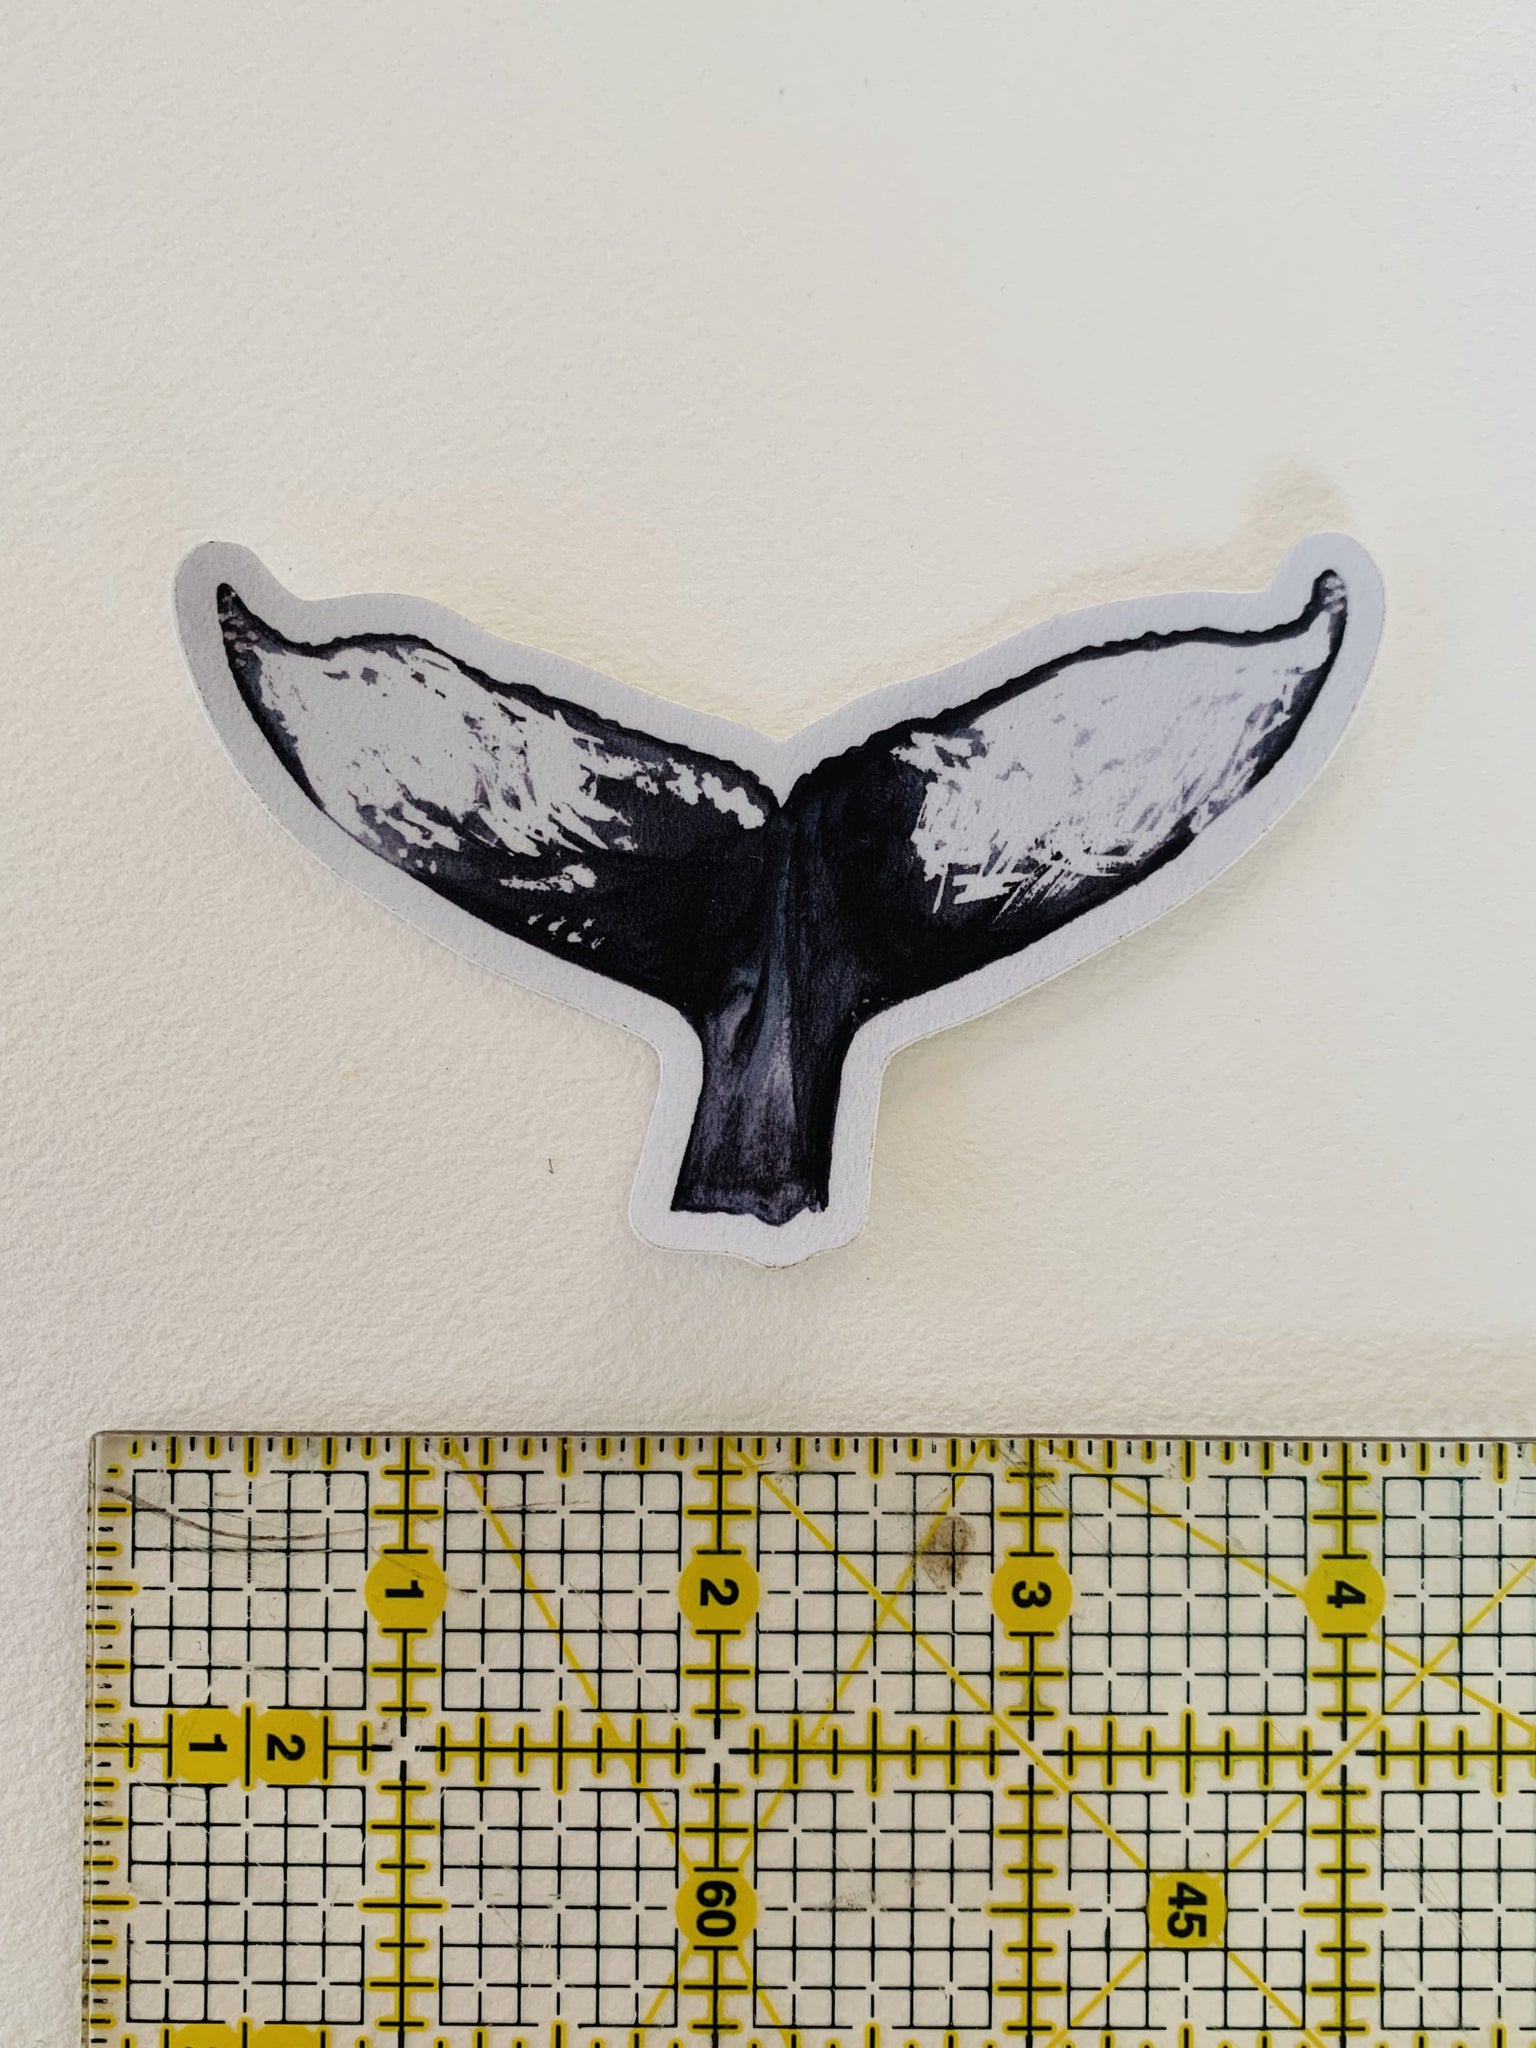 Whale Tail Sticker